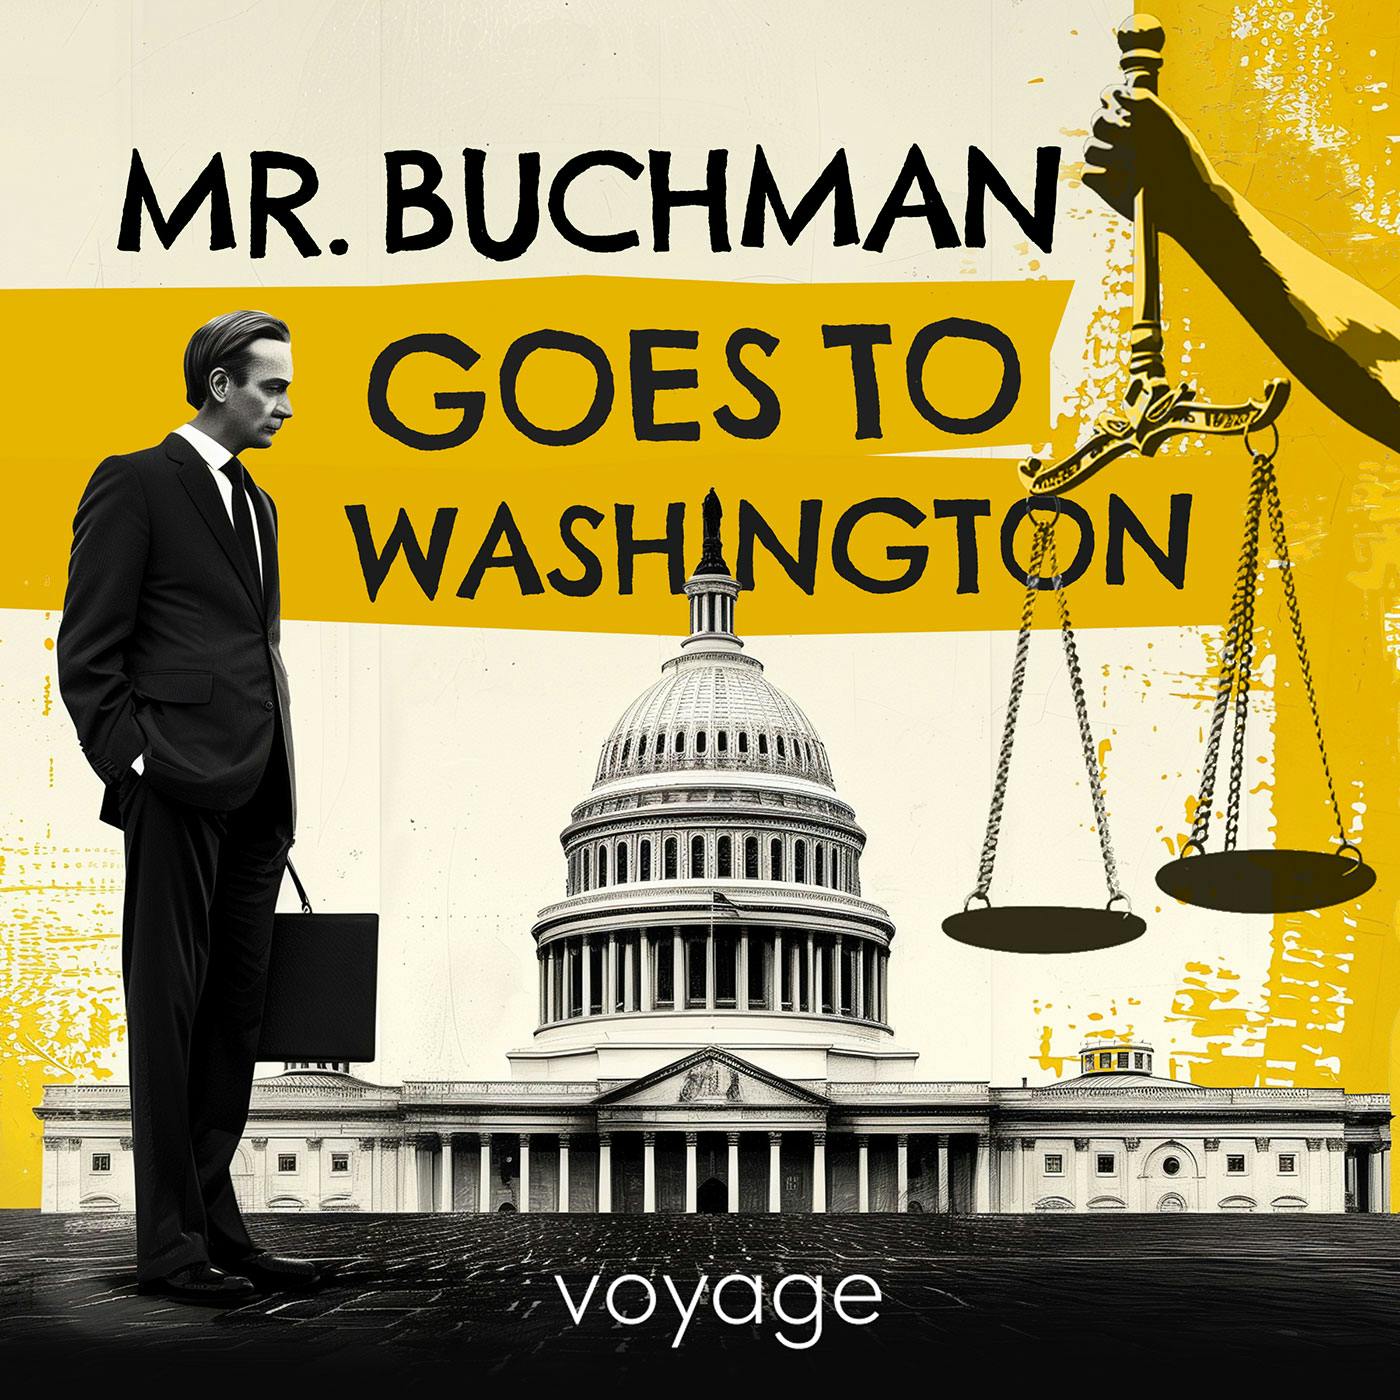 Mr. Buchman Goes To Washington